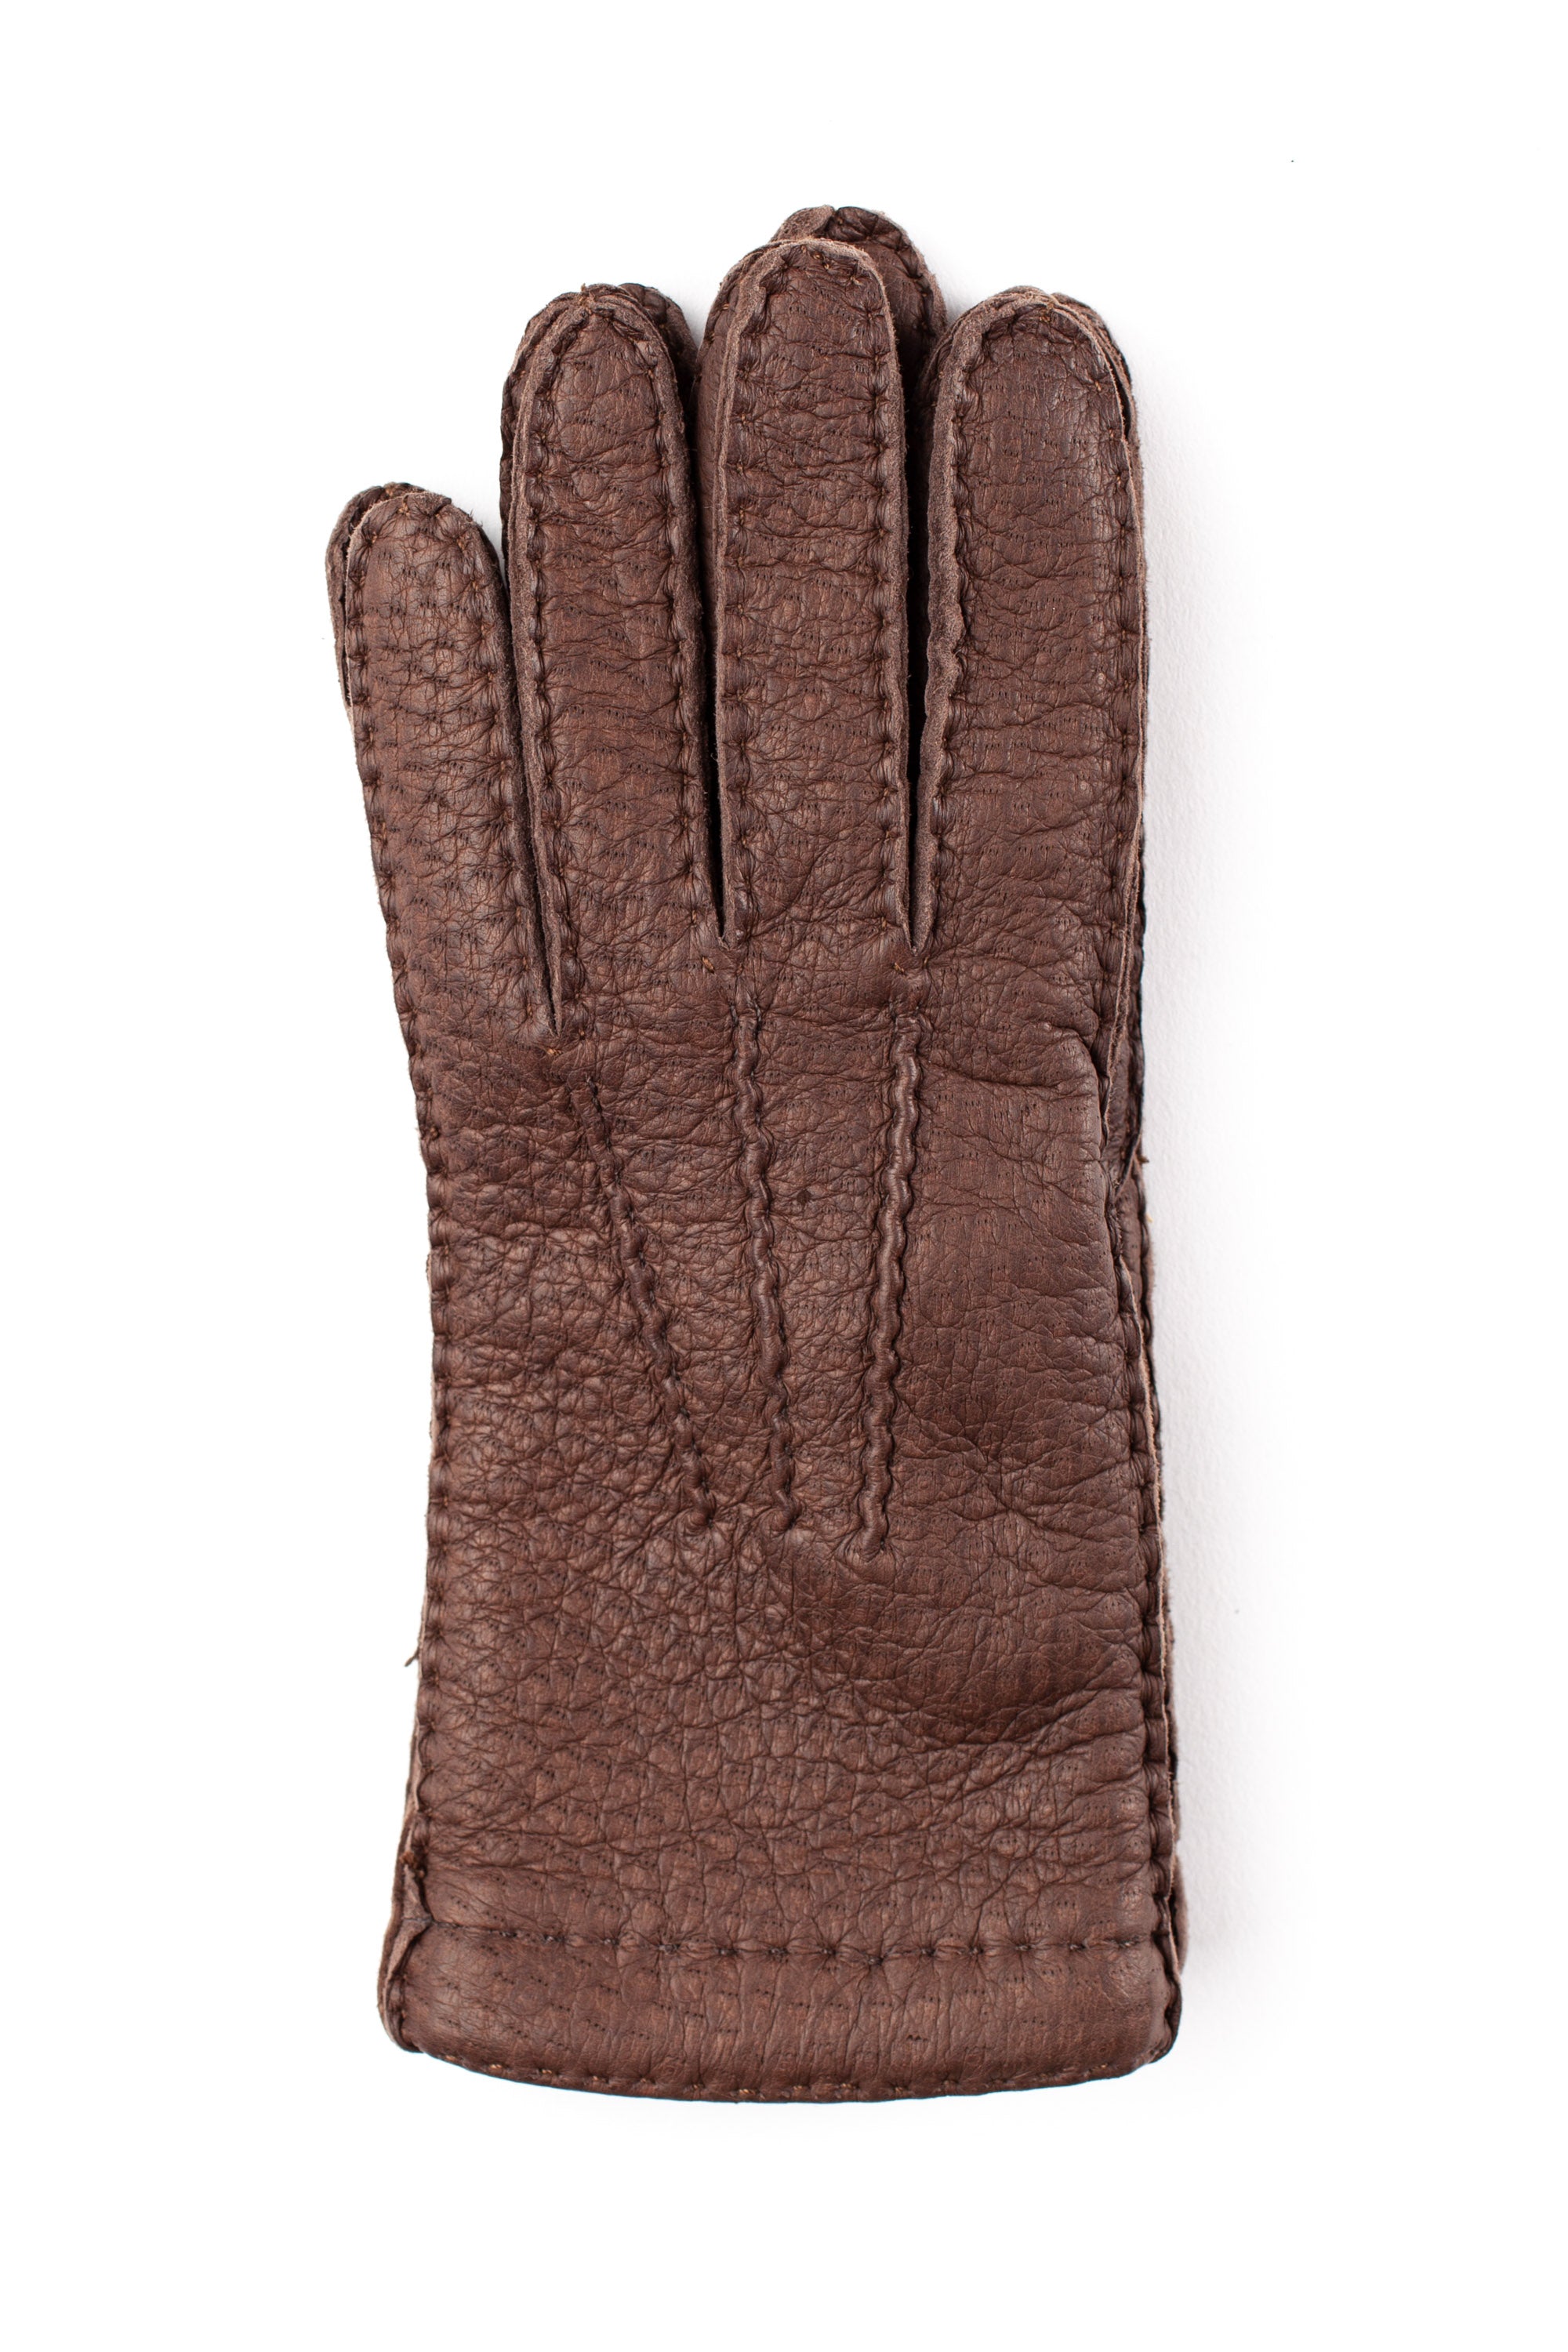 Peccary glove with cashmere interior